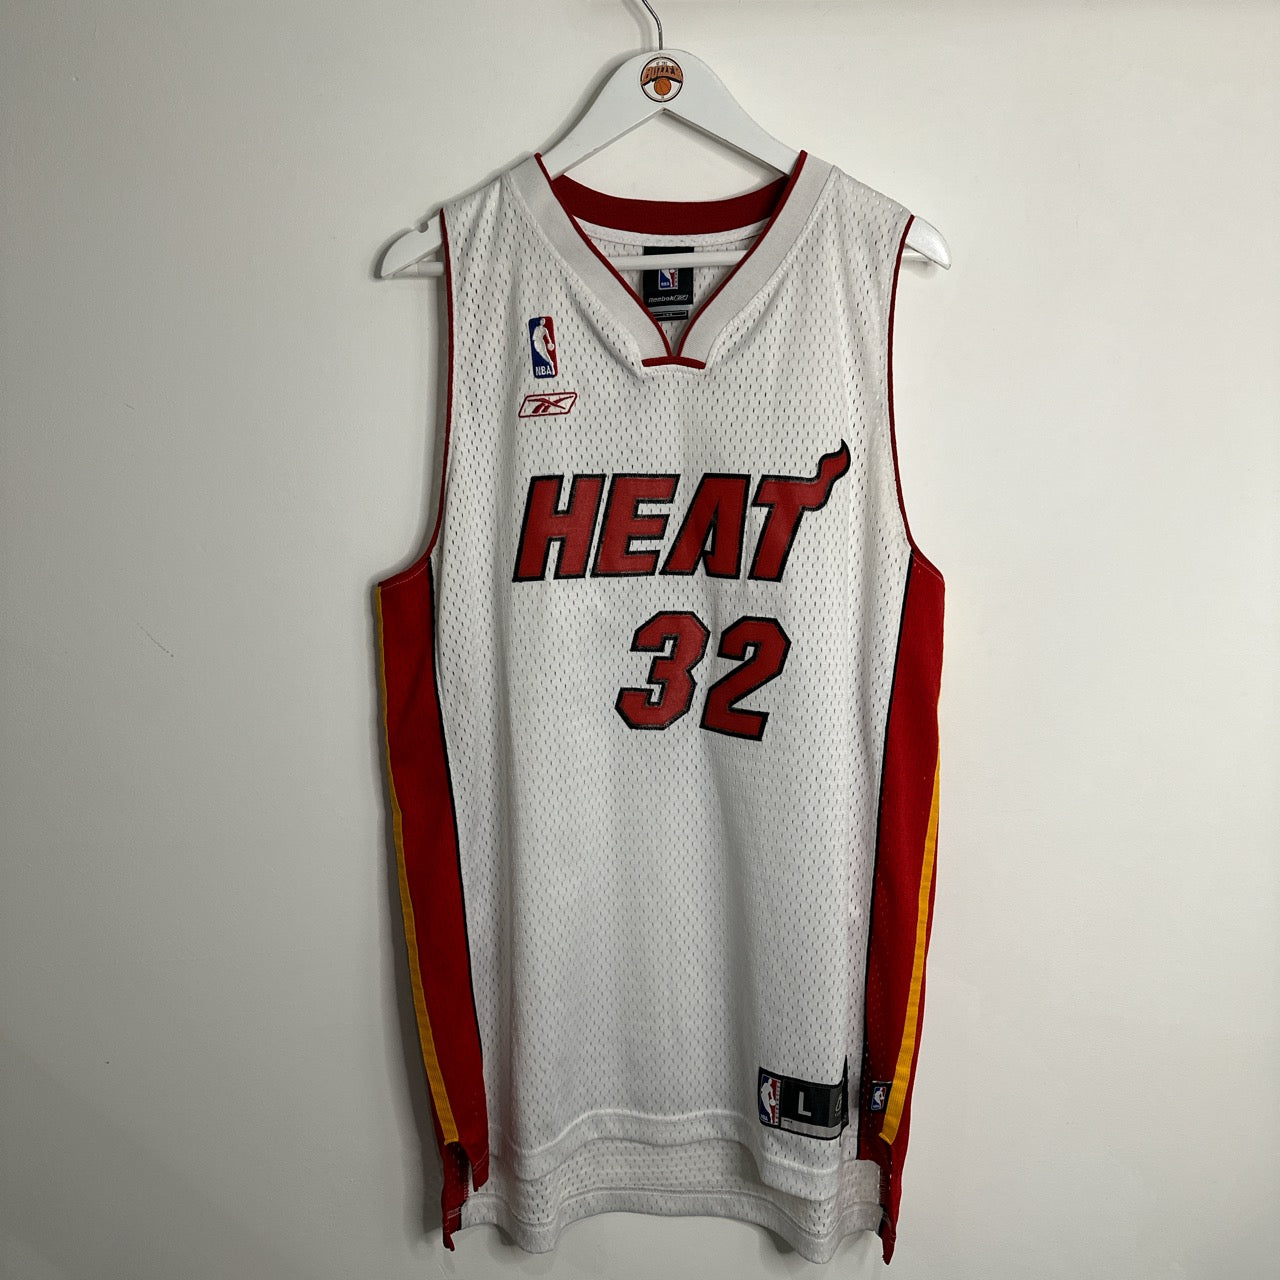 Miami Heat Shaquille O’Neal Reebok jersey - Large